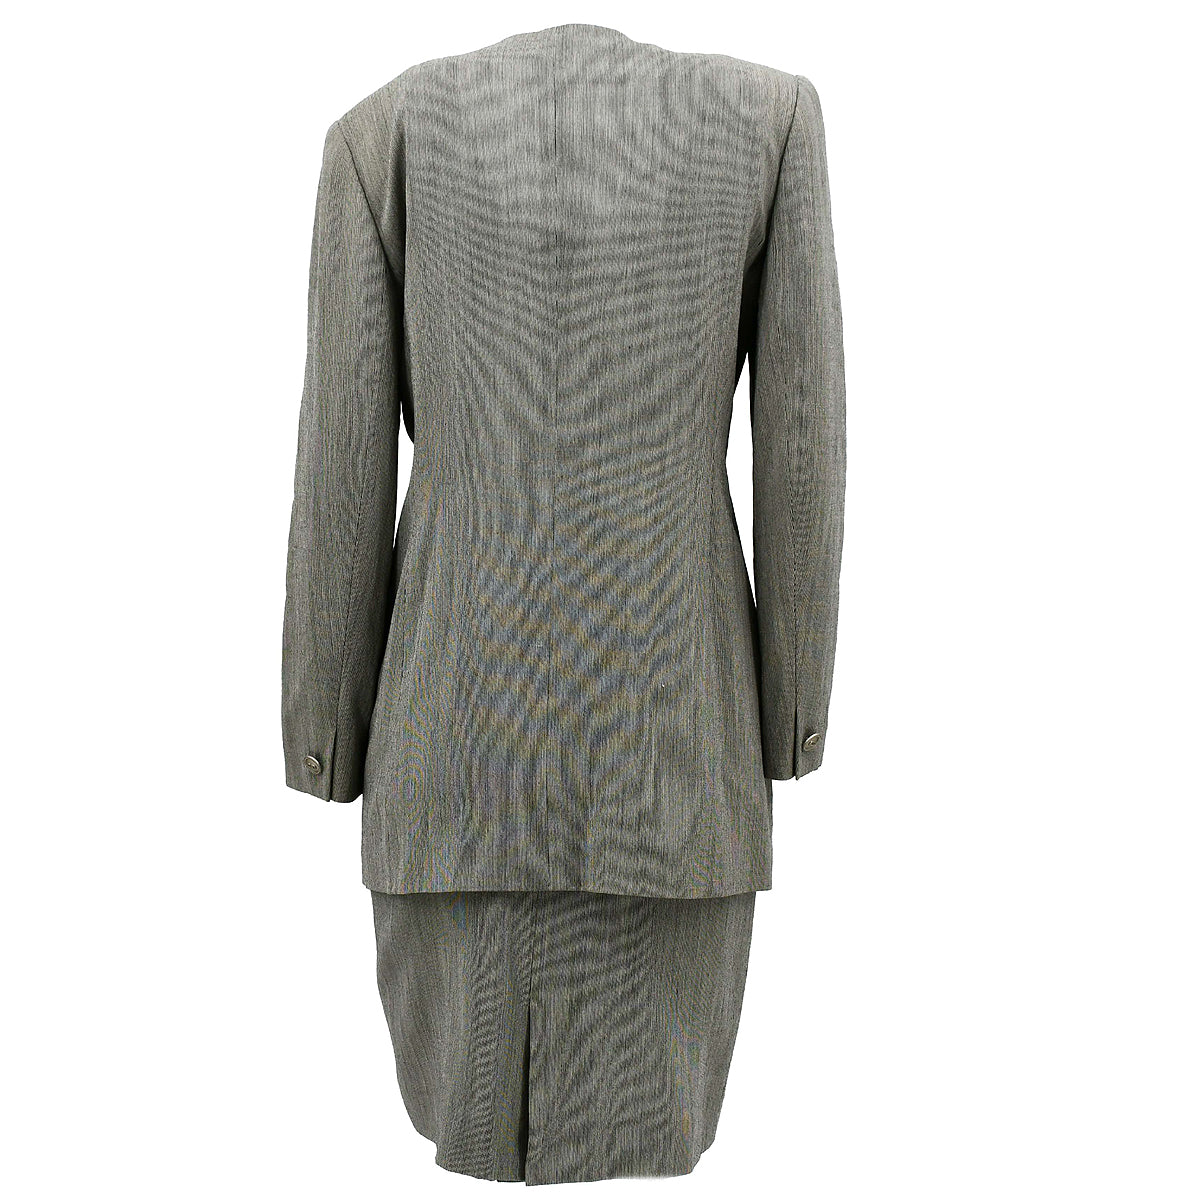 Christian Dior Setup Suit Jacket Skirt Gray 